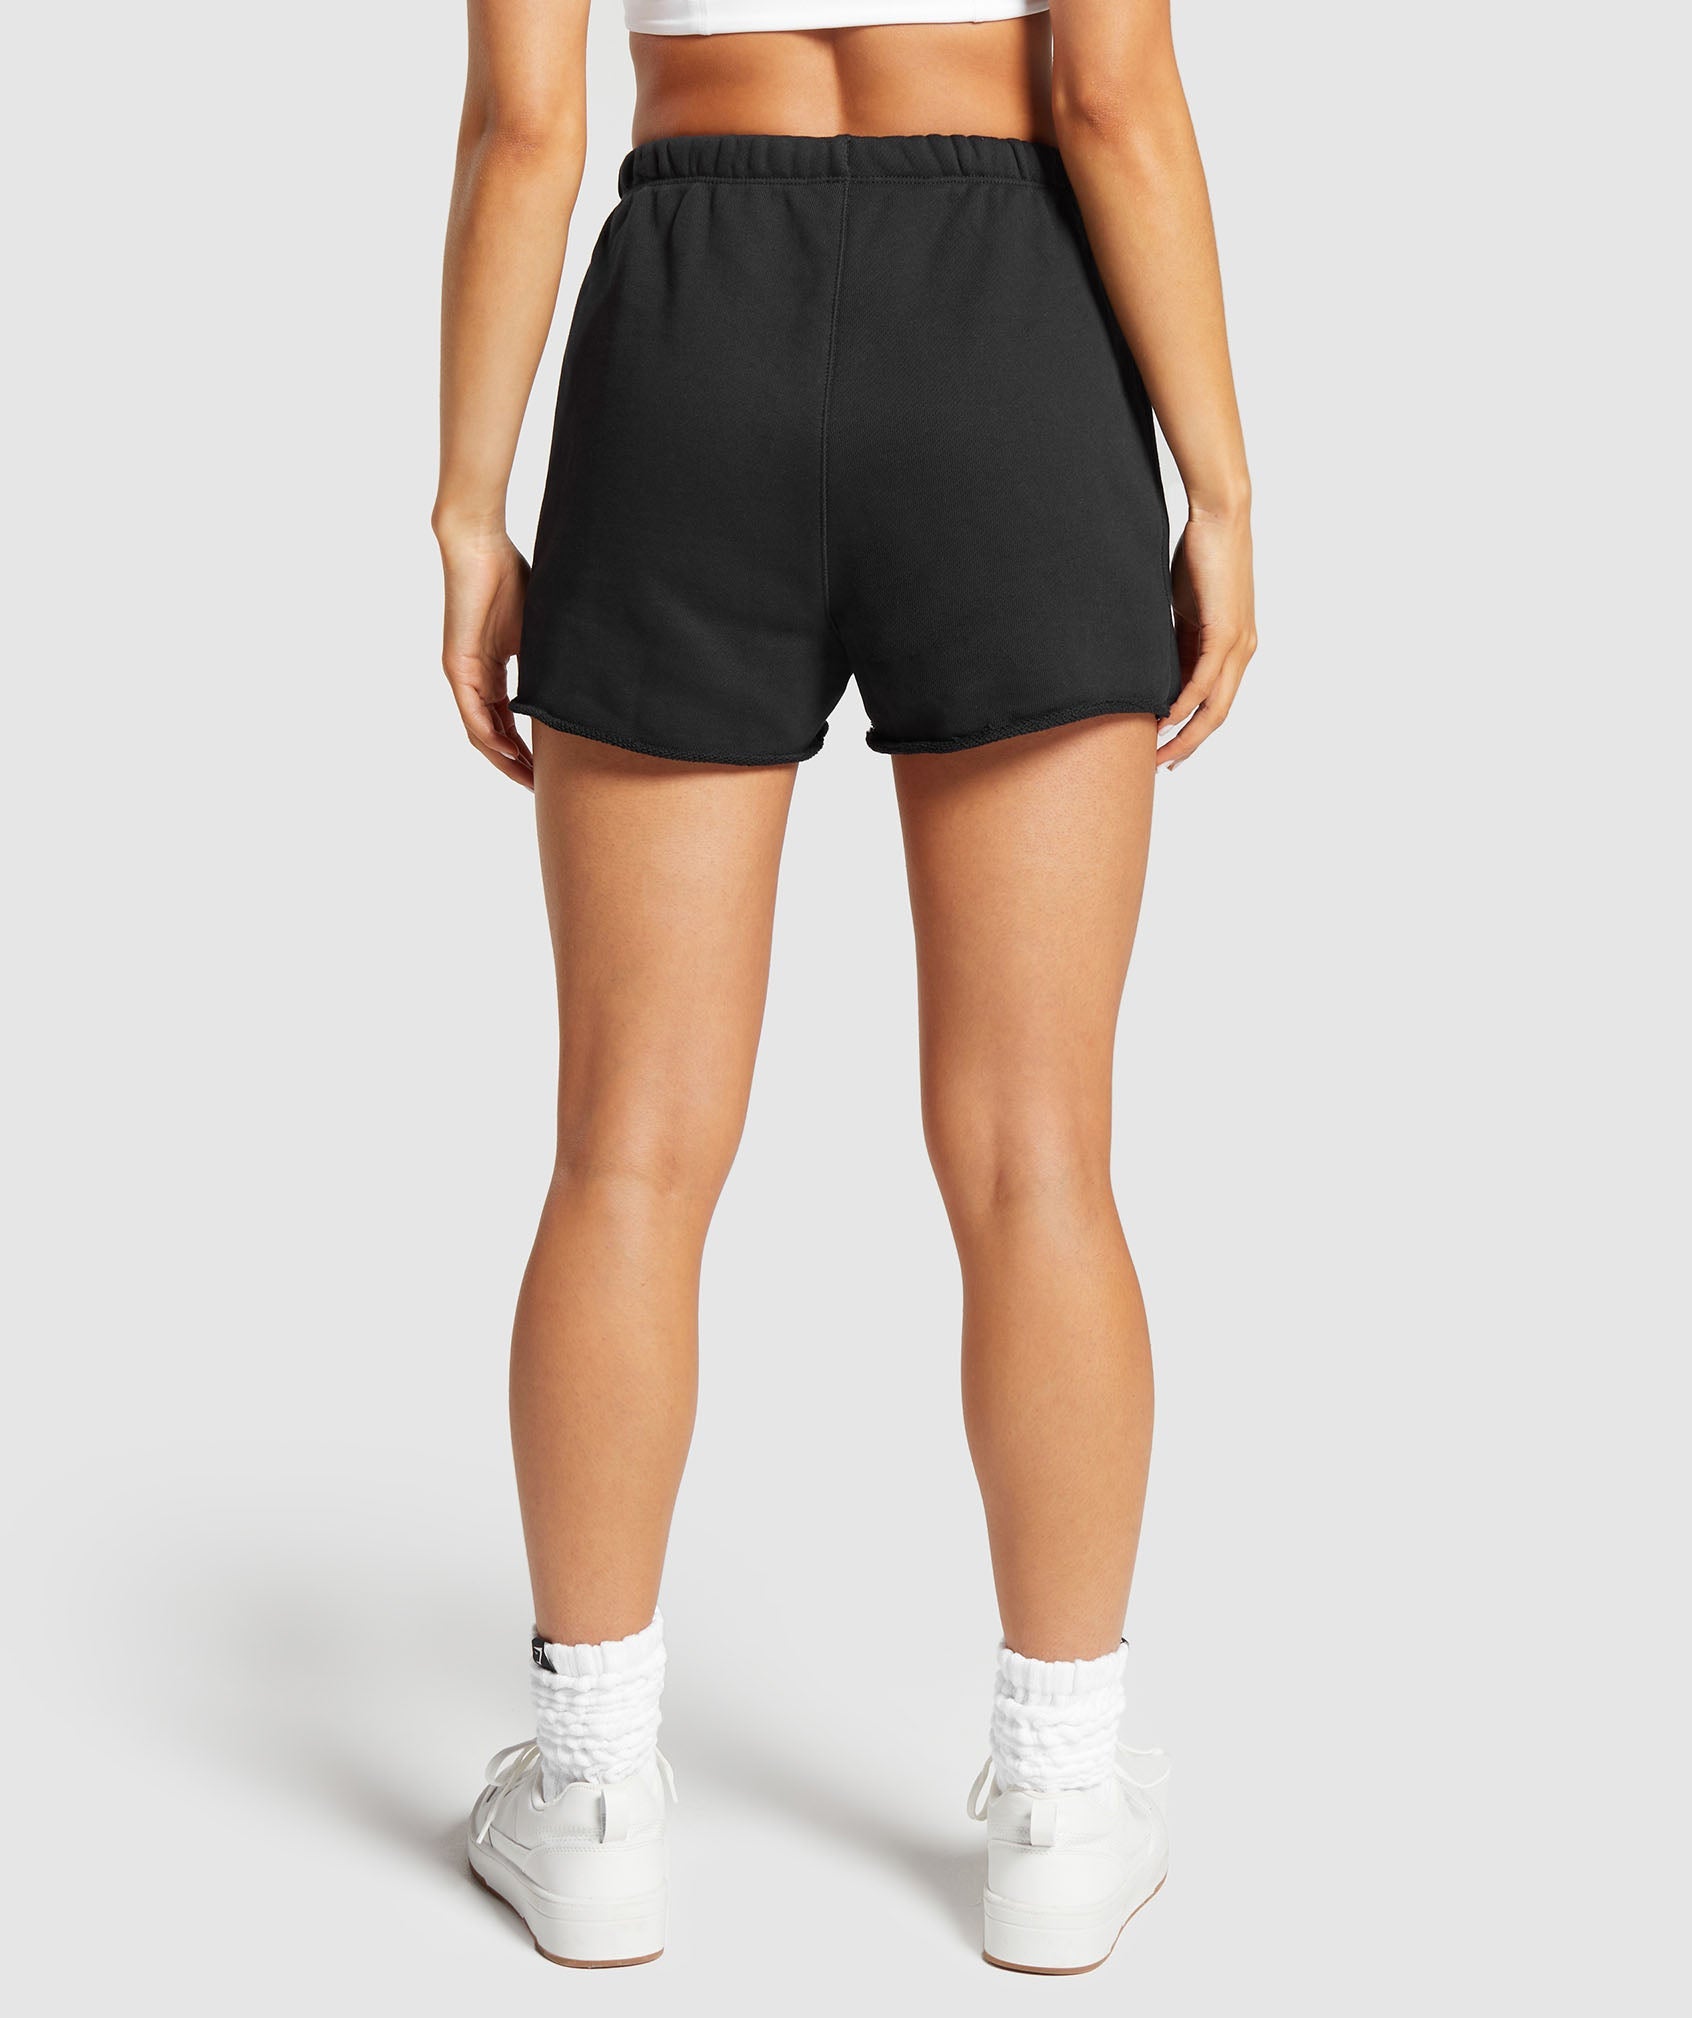 Gymshark Gymshark Flex Shorts - Black/Charcoal Grey on Marmalade